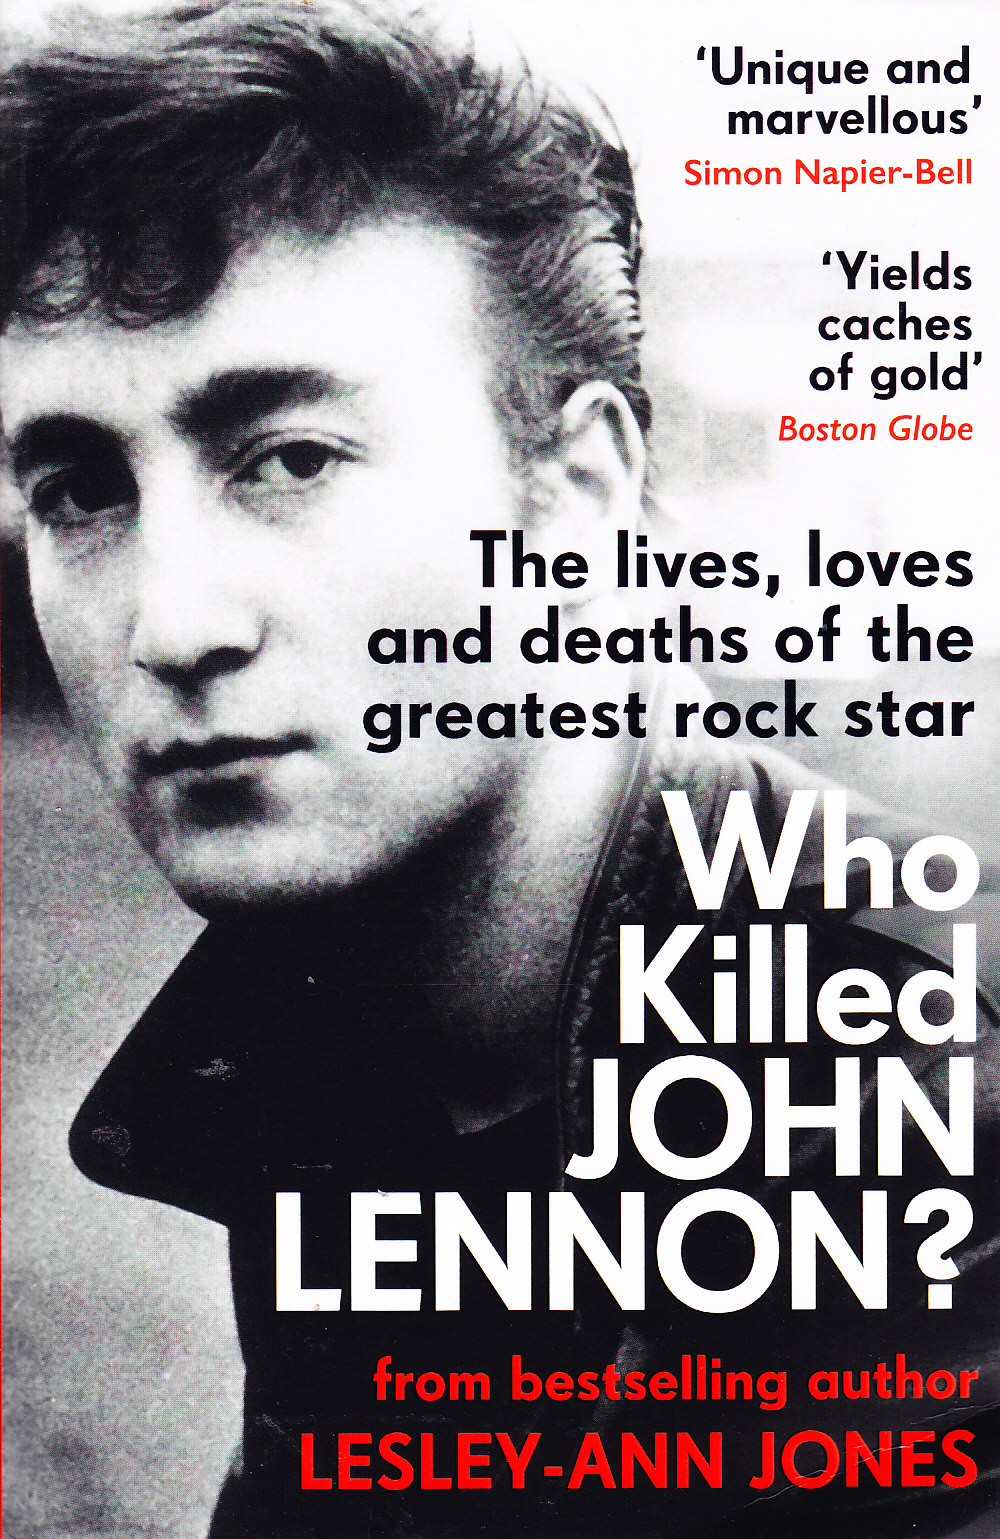 WHO KILLED JON LENNON